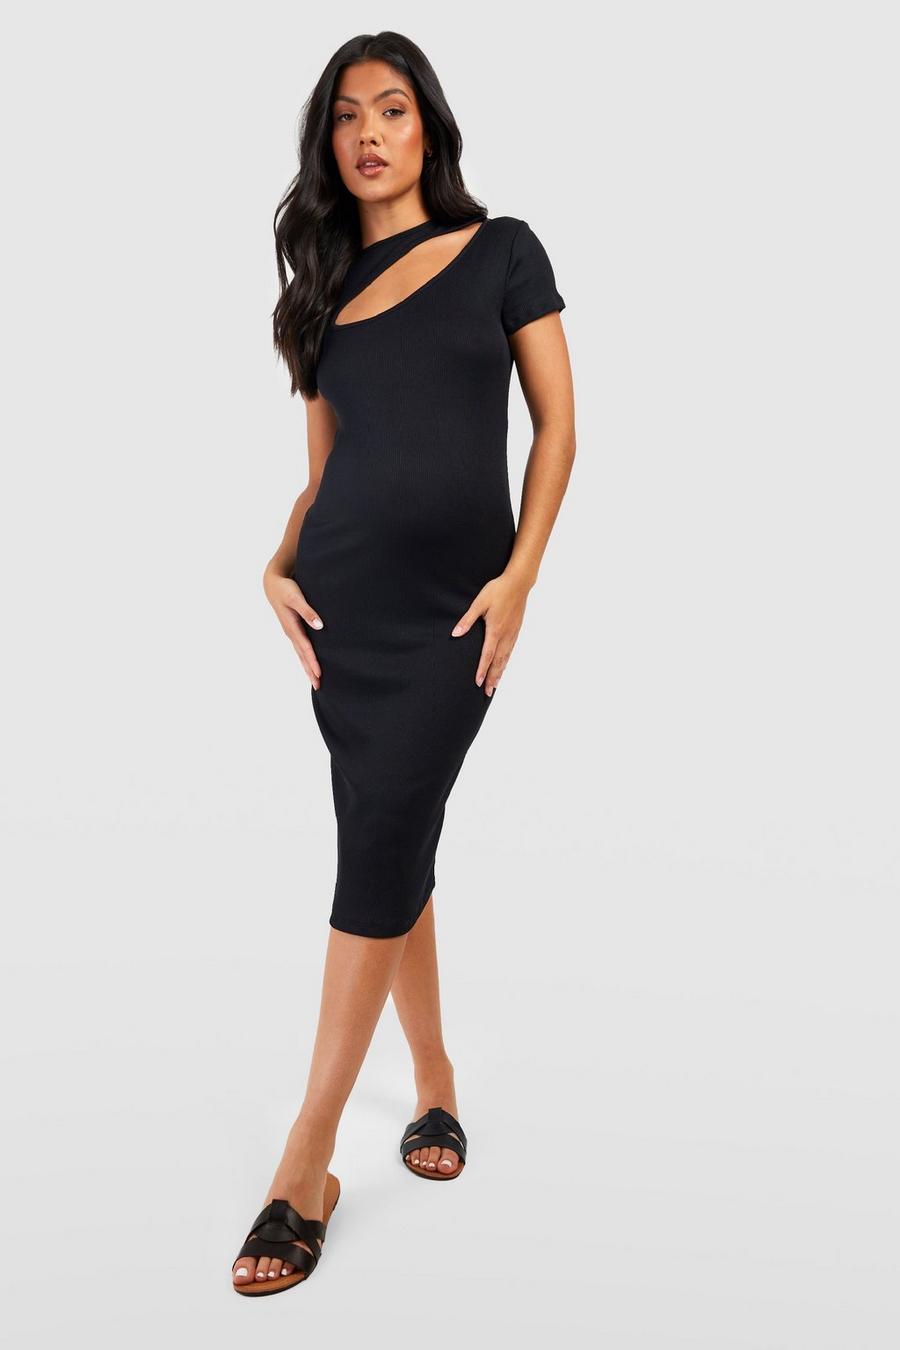 Black Maternity Cut Out Short Sleeve Bodycon Dress